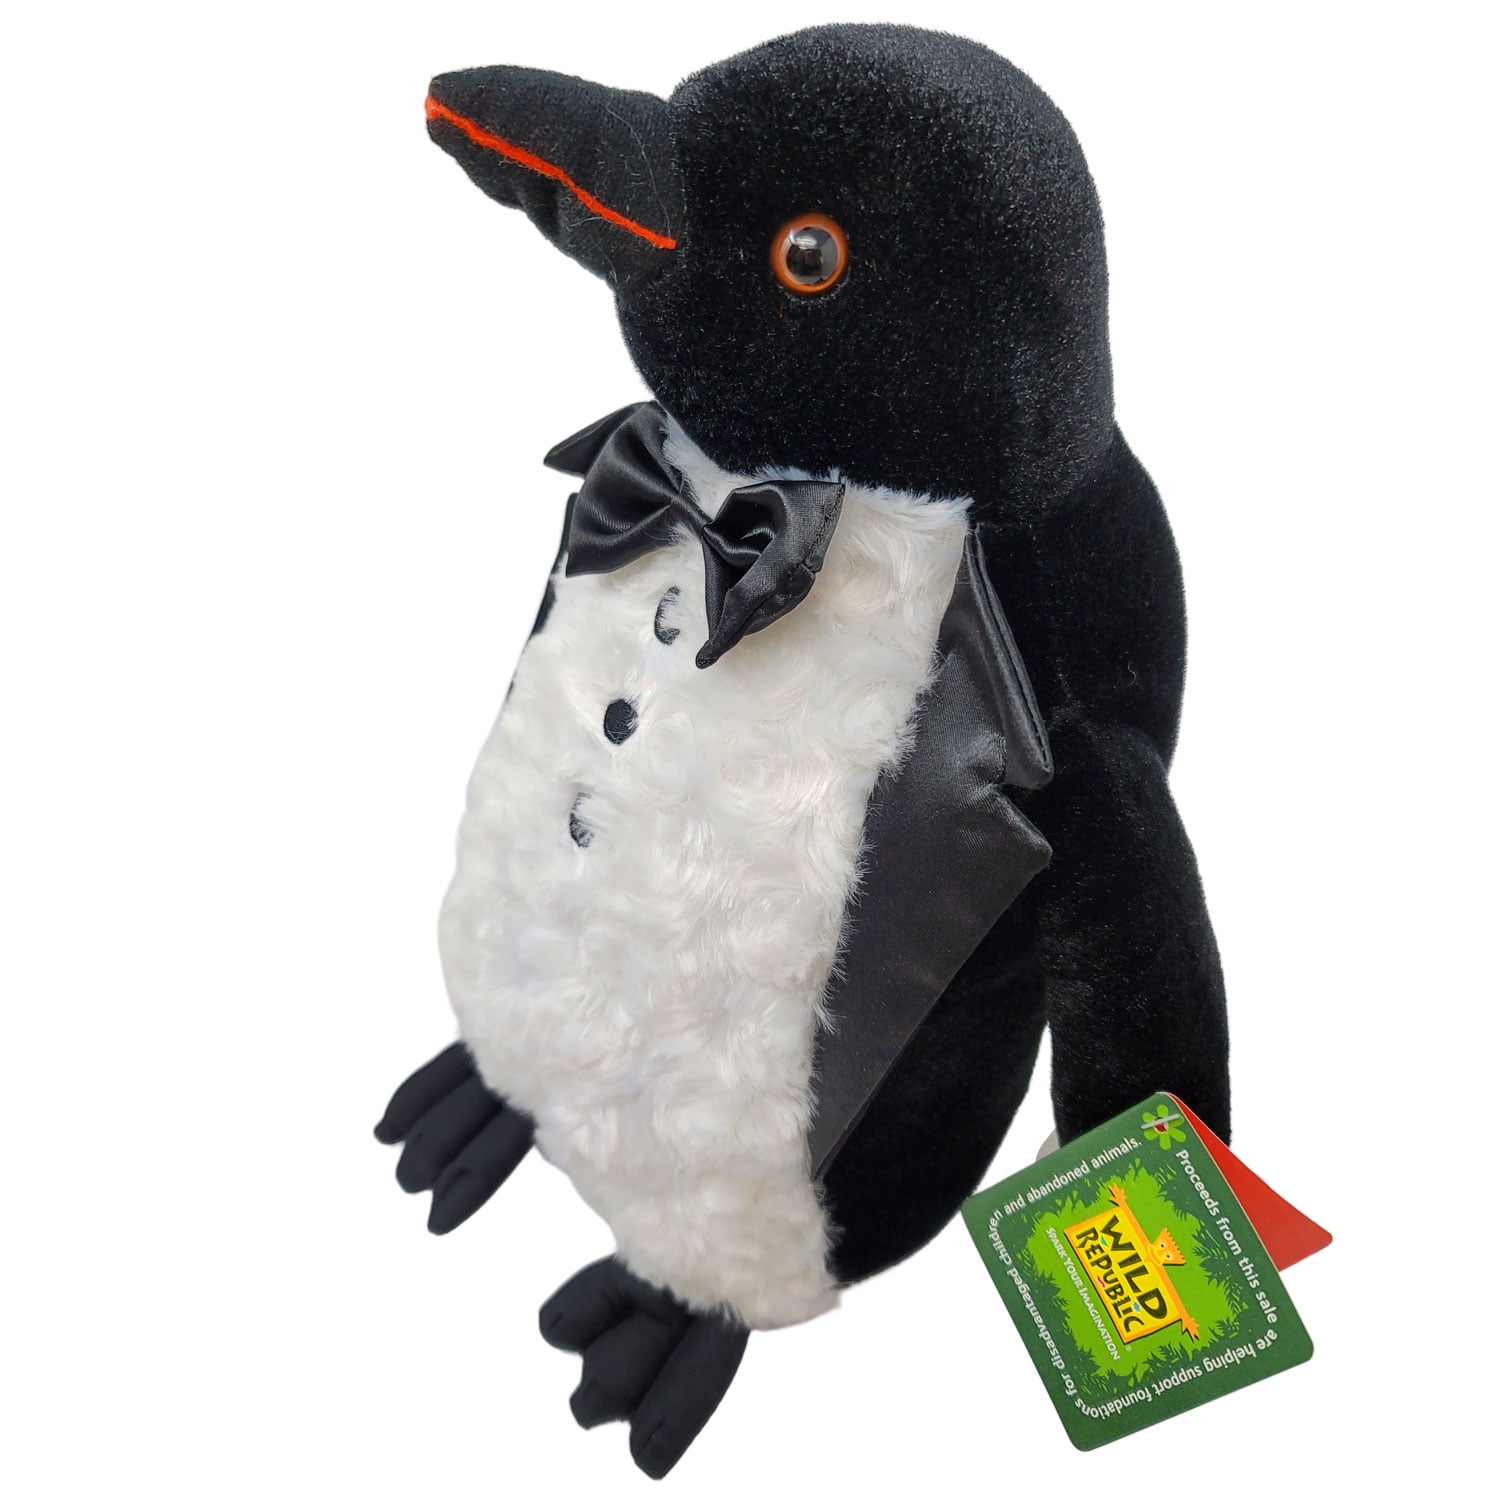 Gifts for Kids Wild Republic Penguin Plush Cuddlekins 12 inches Stuffed Animal Plush Toy